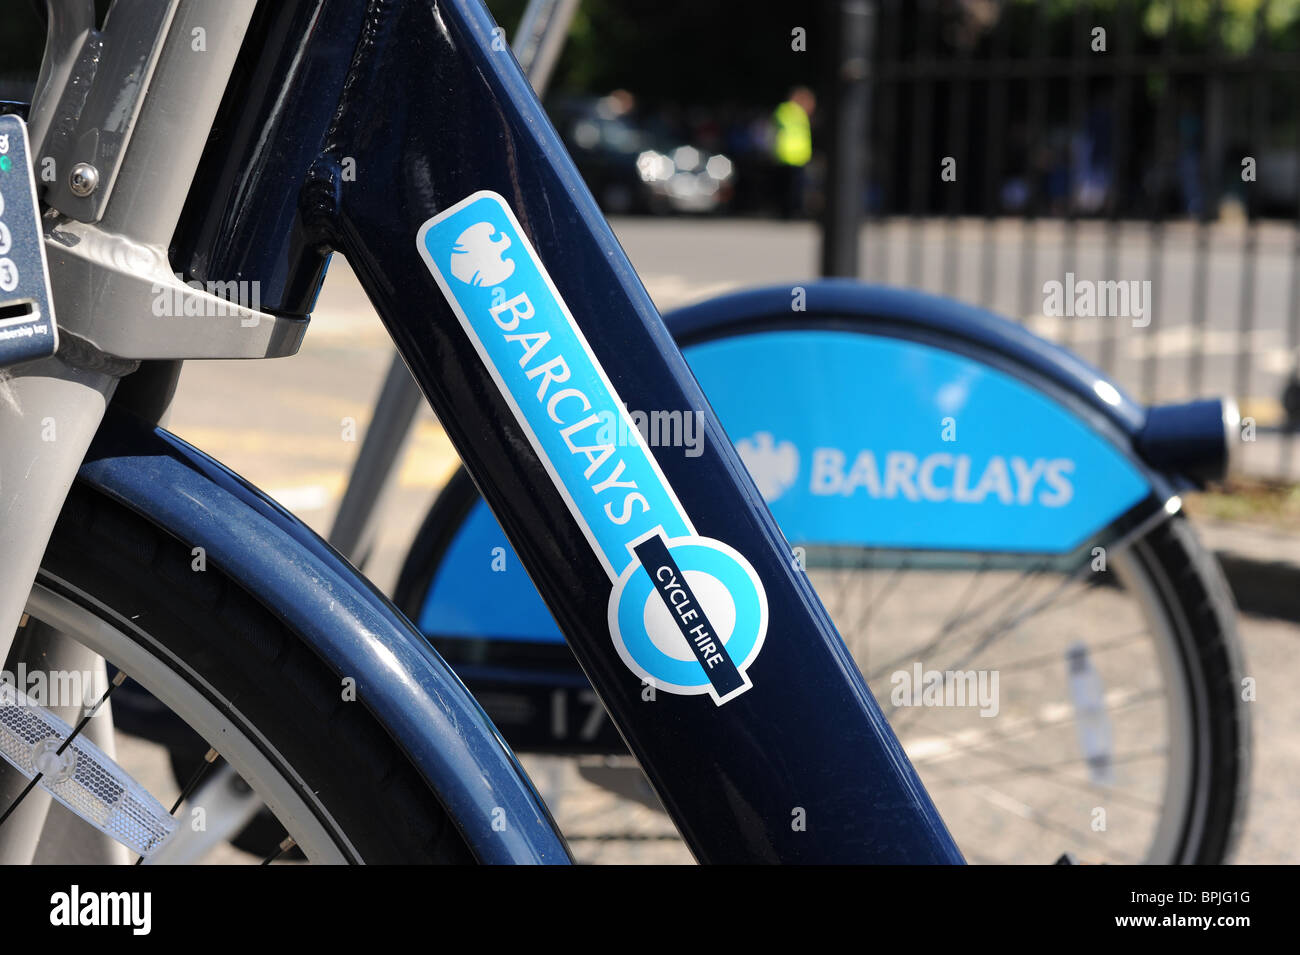 Barclays new cycle hire introduced by Mayor Boris Johnson Stock Photo